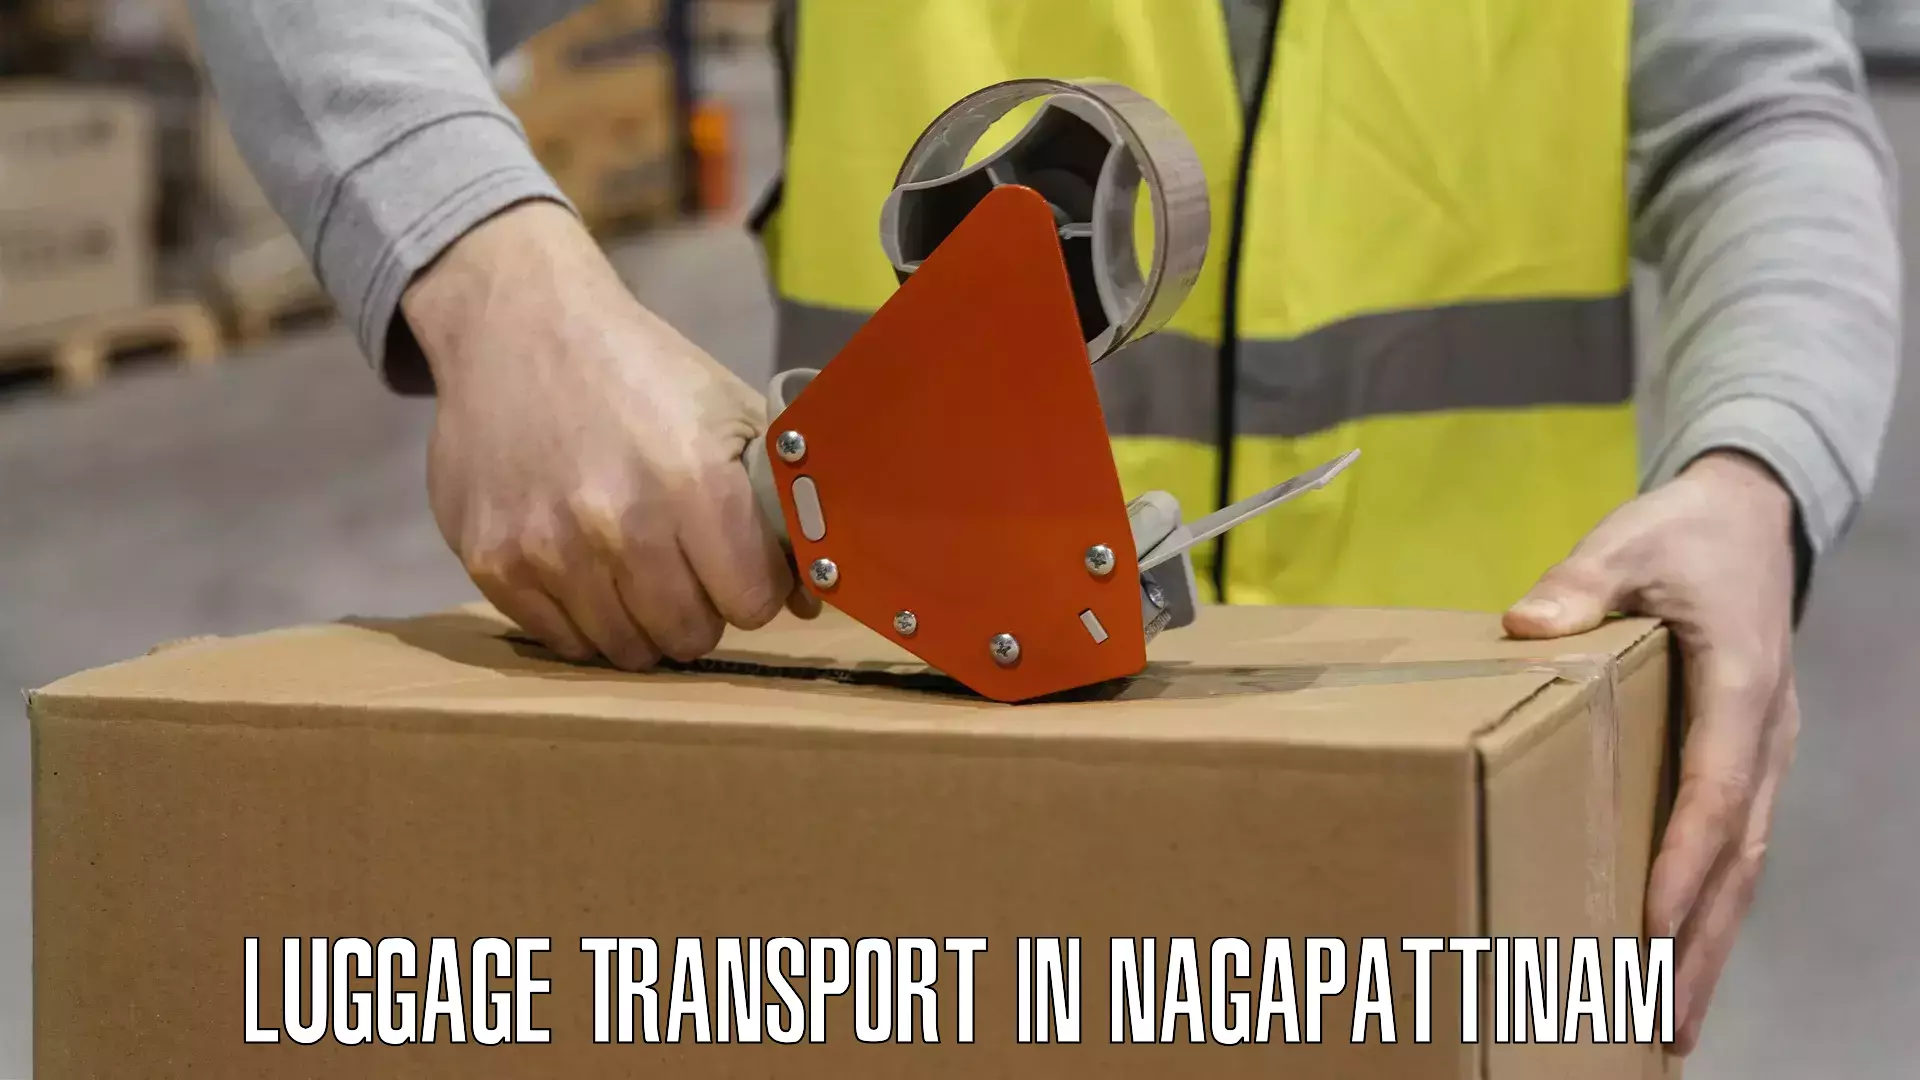 Professional baggage transport in Nagapattinam